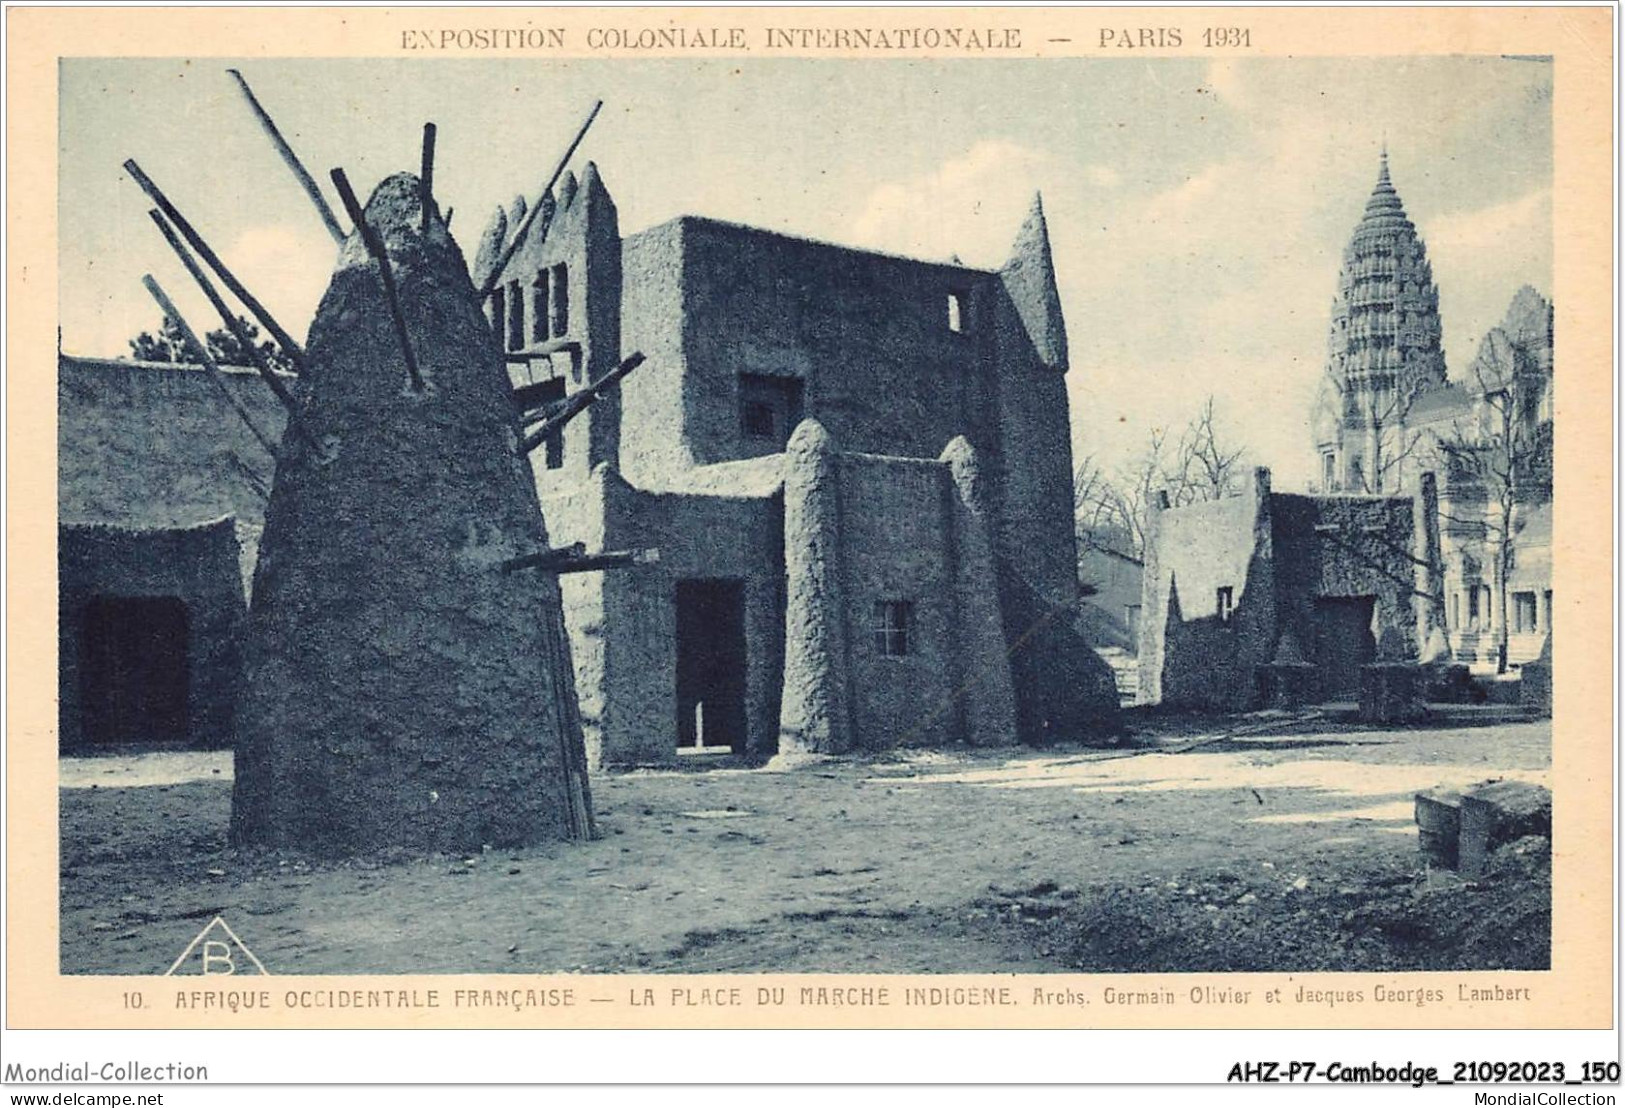 AHZP7-CAMBODGE-0671 - EXPOSITION COLONIALE INTERNATIONALE - PARIS 1931 - AFRIQUE OCCIDENTALE FRANCAISE - MARCHE INDIGENE - Cambodia